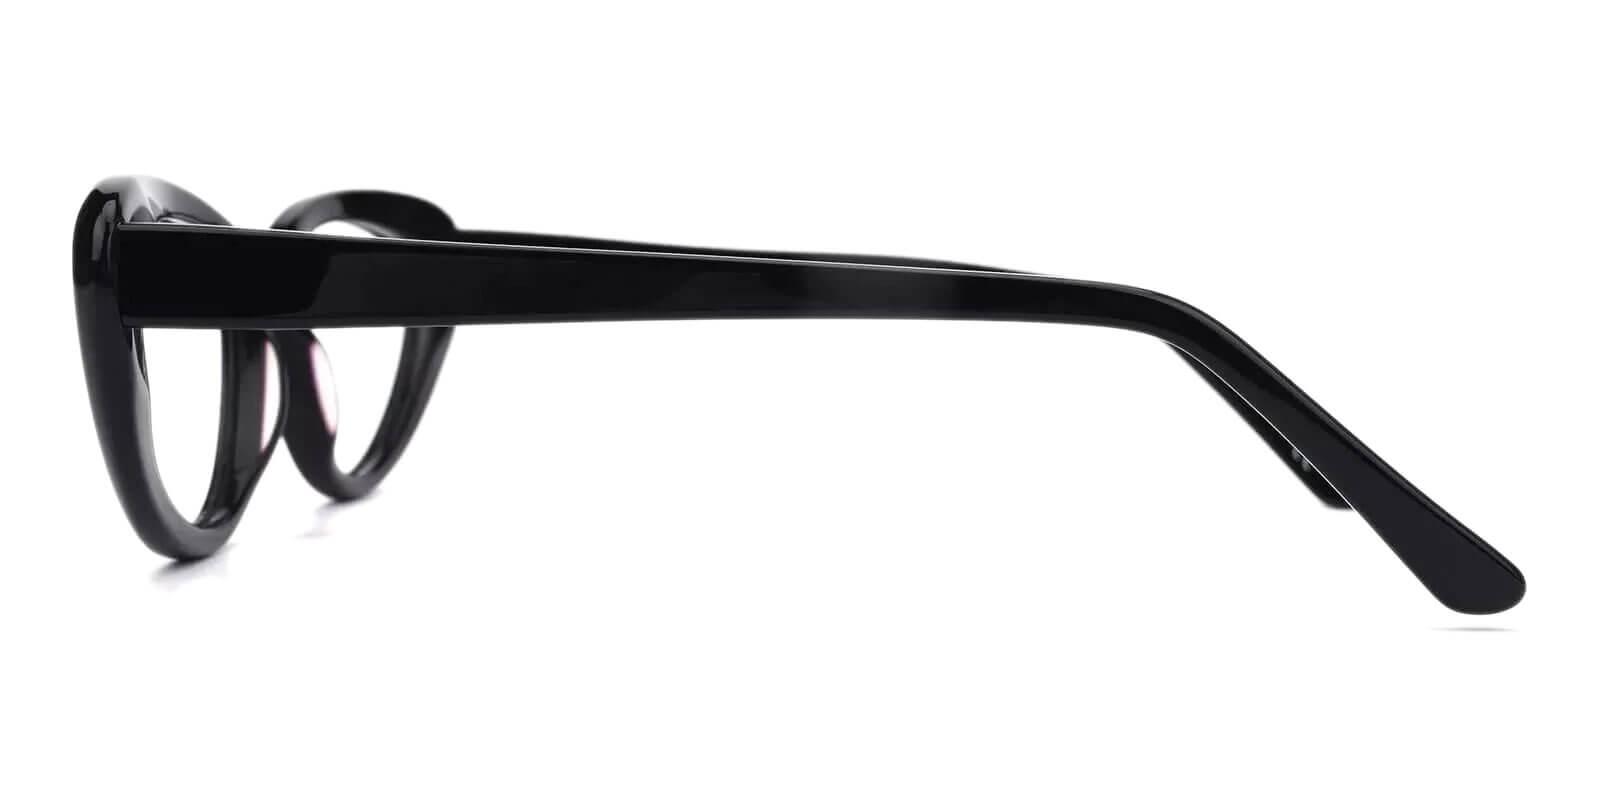 Stella Black Acetate Eyeglasses , SpringHinges , UniversalBridgeFit Frames from ABBE Glasses